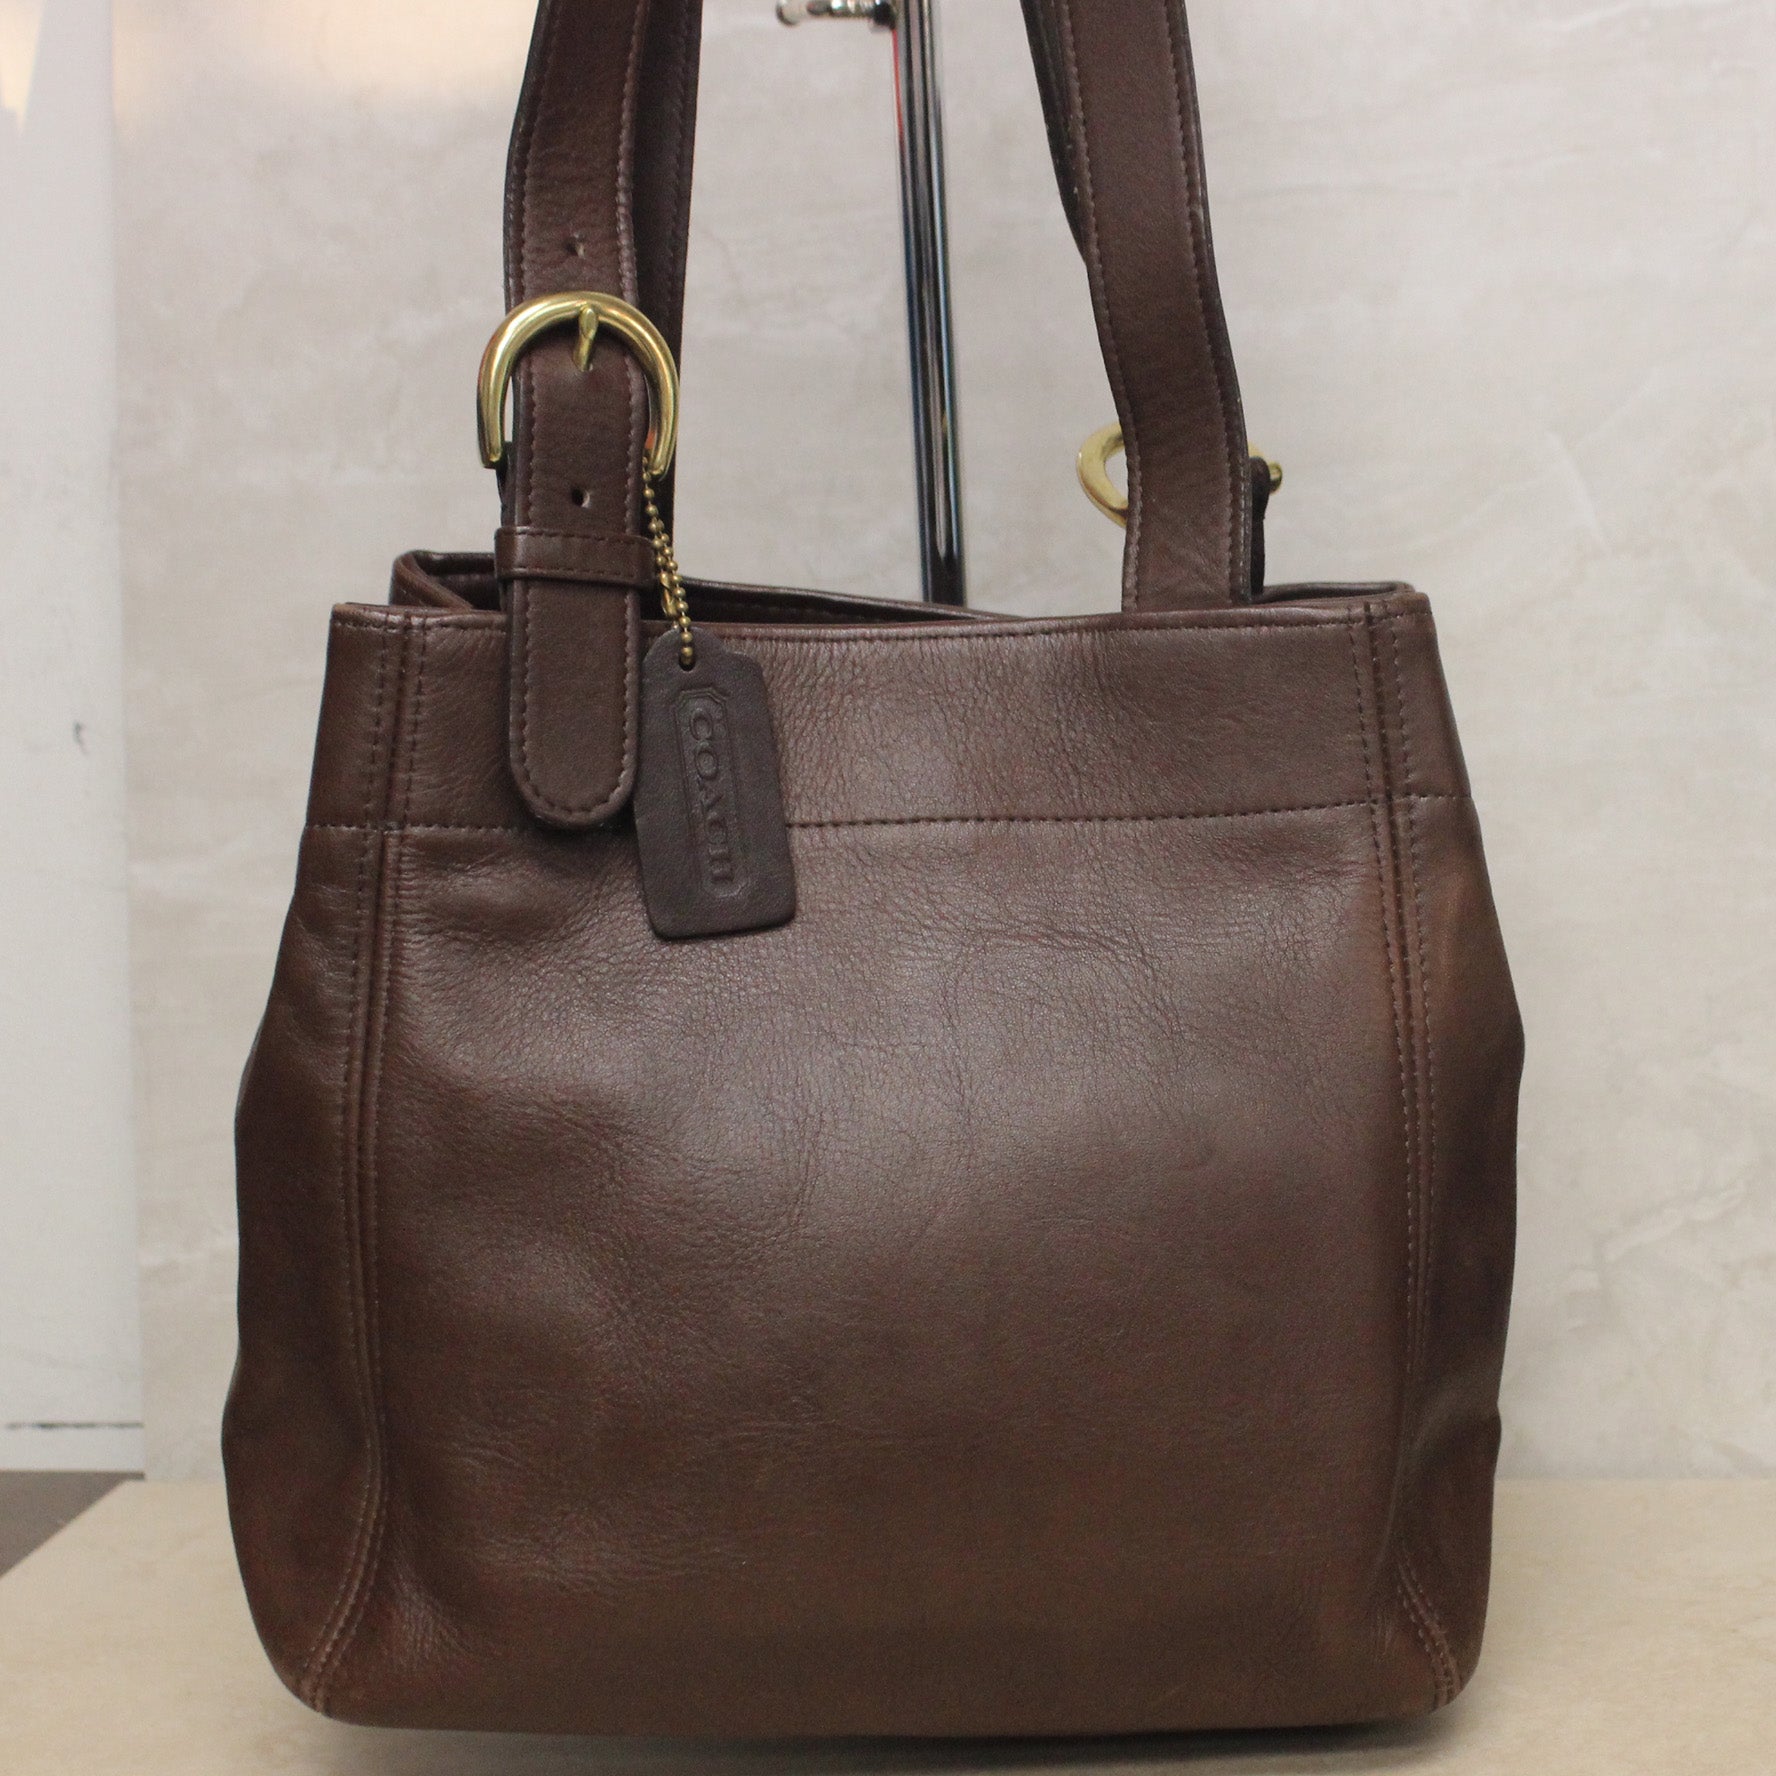 Coach Purse: 4157 Soho Brown Leather Shoulder Bag